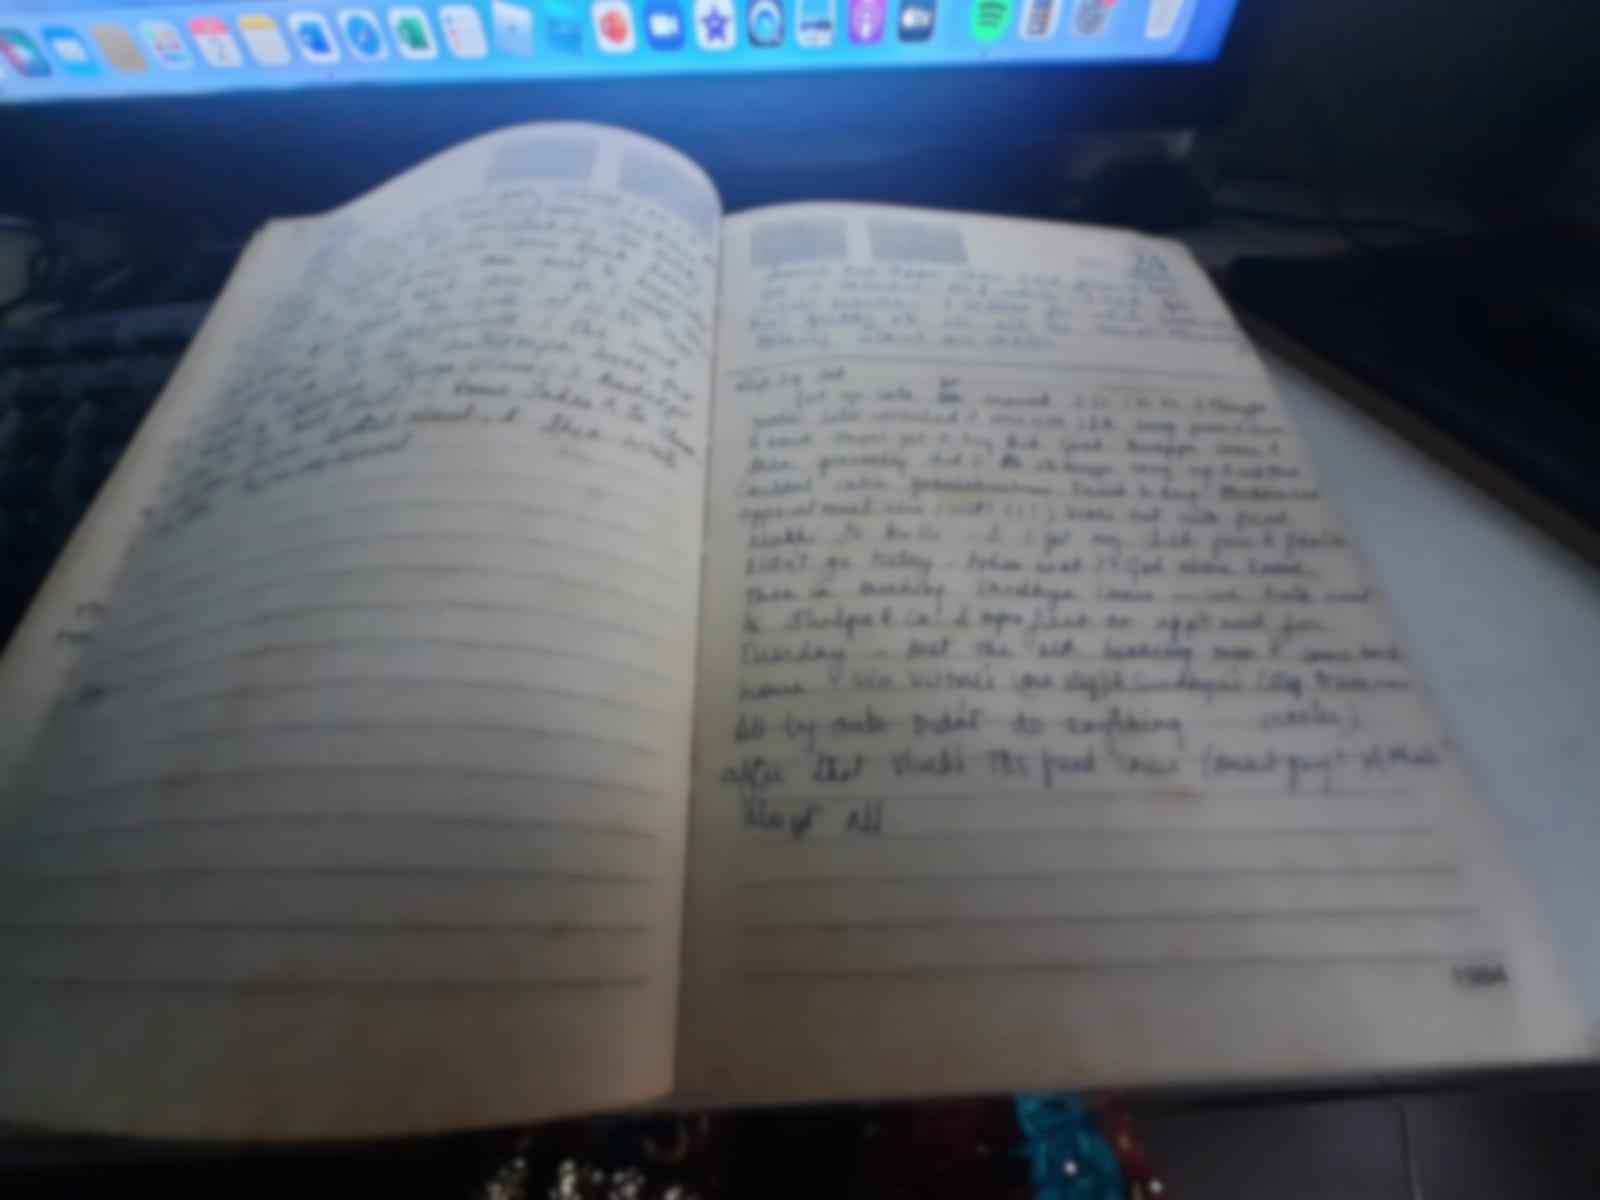 Crafting memories from diaries